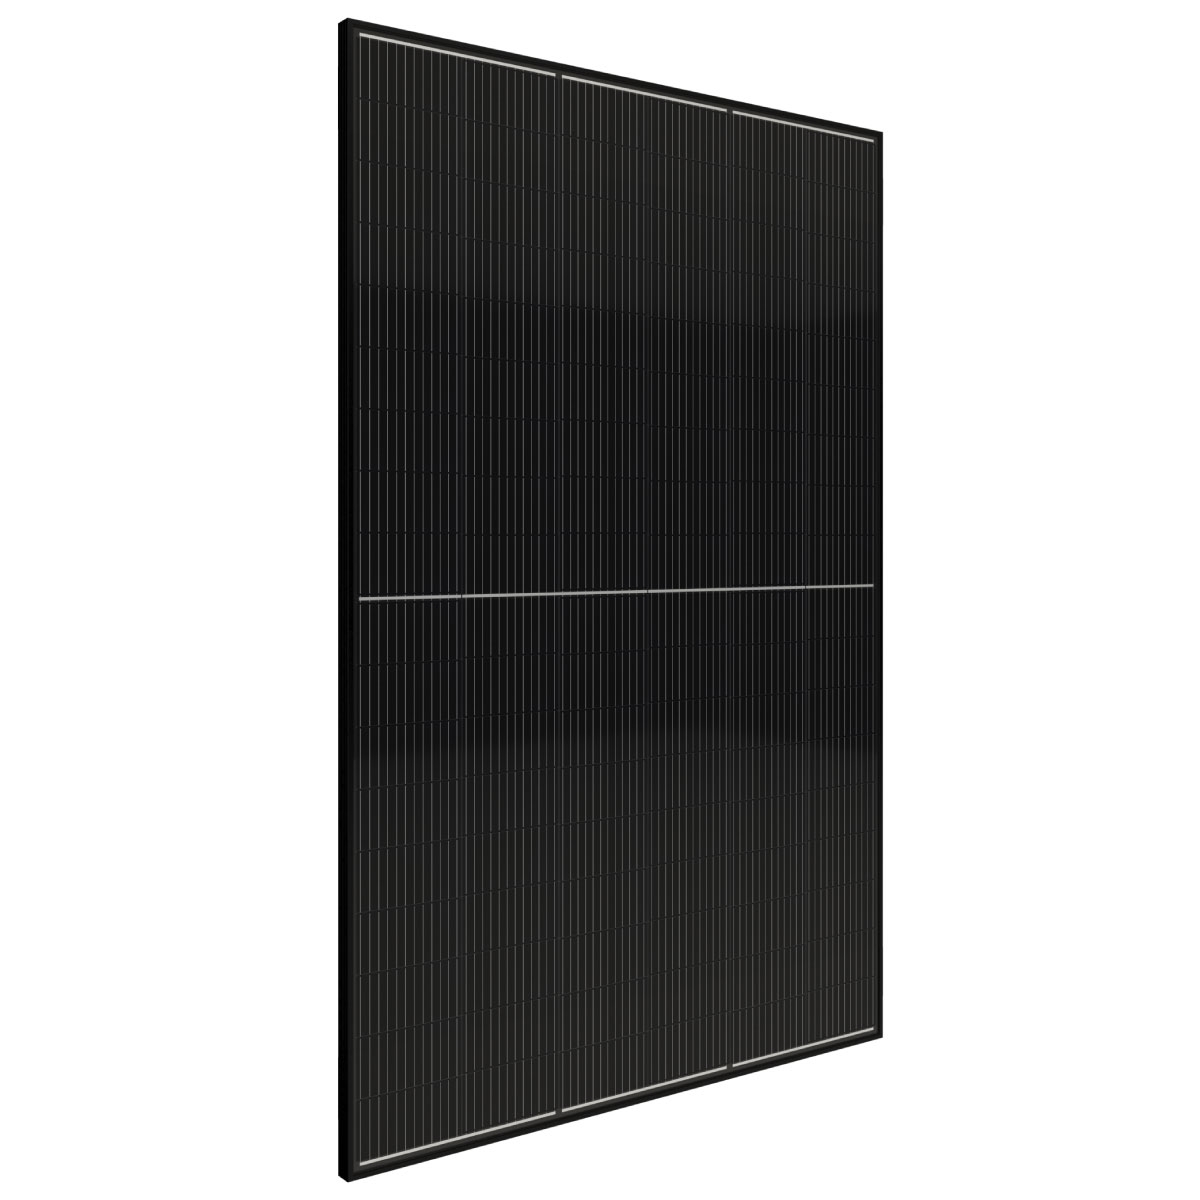 TommaTech 405Wp 108PM M10 Dark Series Solar Panel